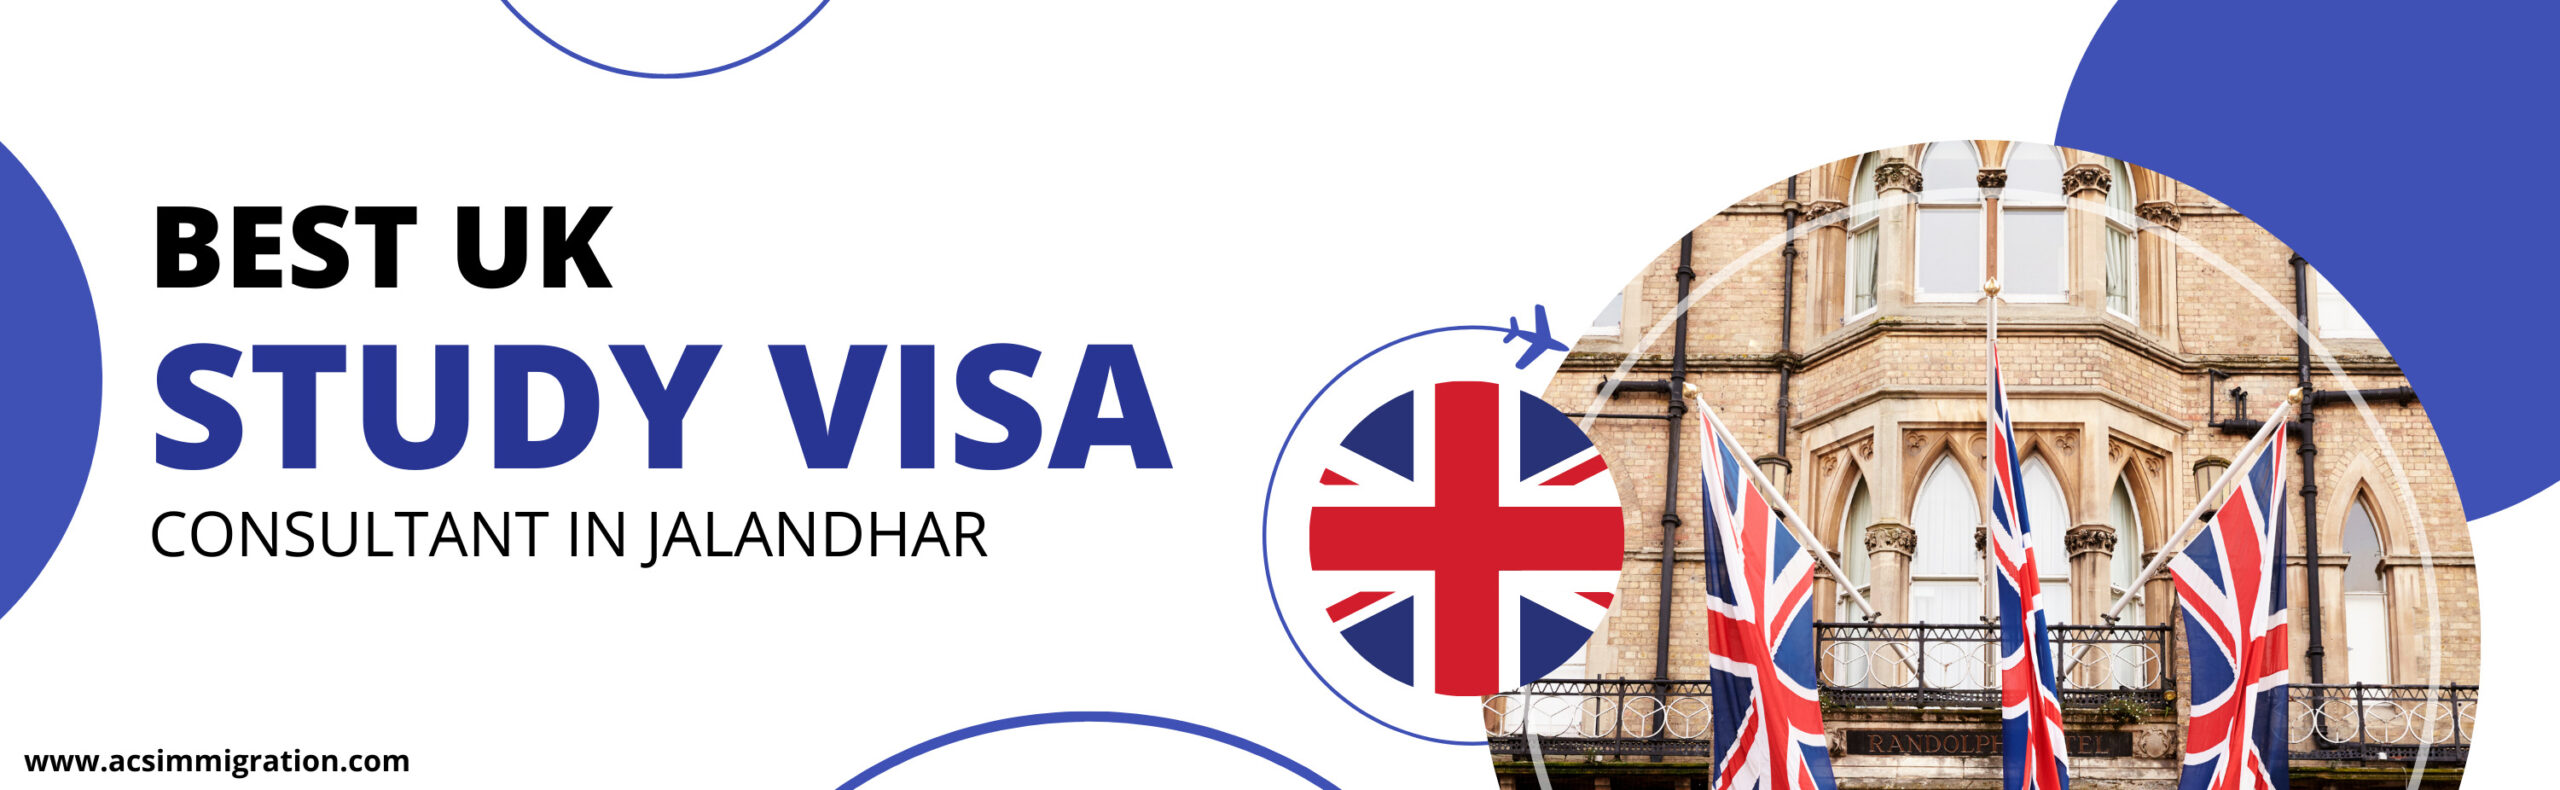 UK-visa-consultant-in-jalandhar